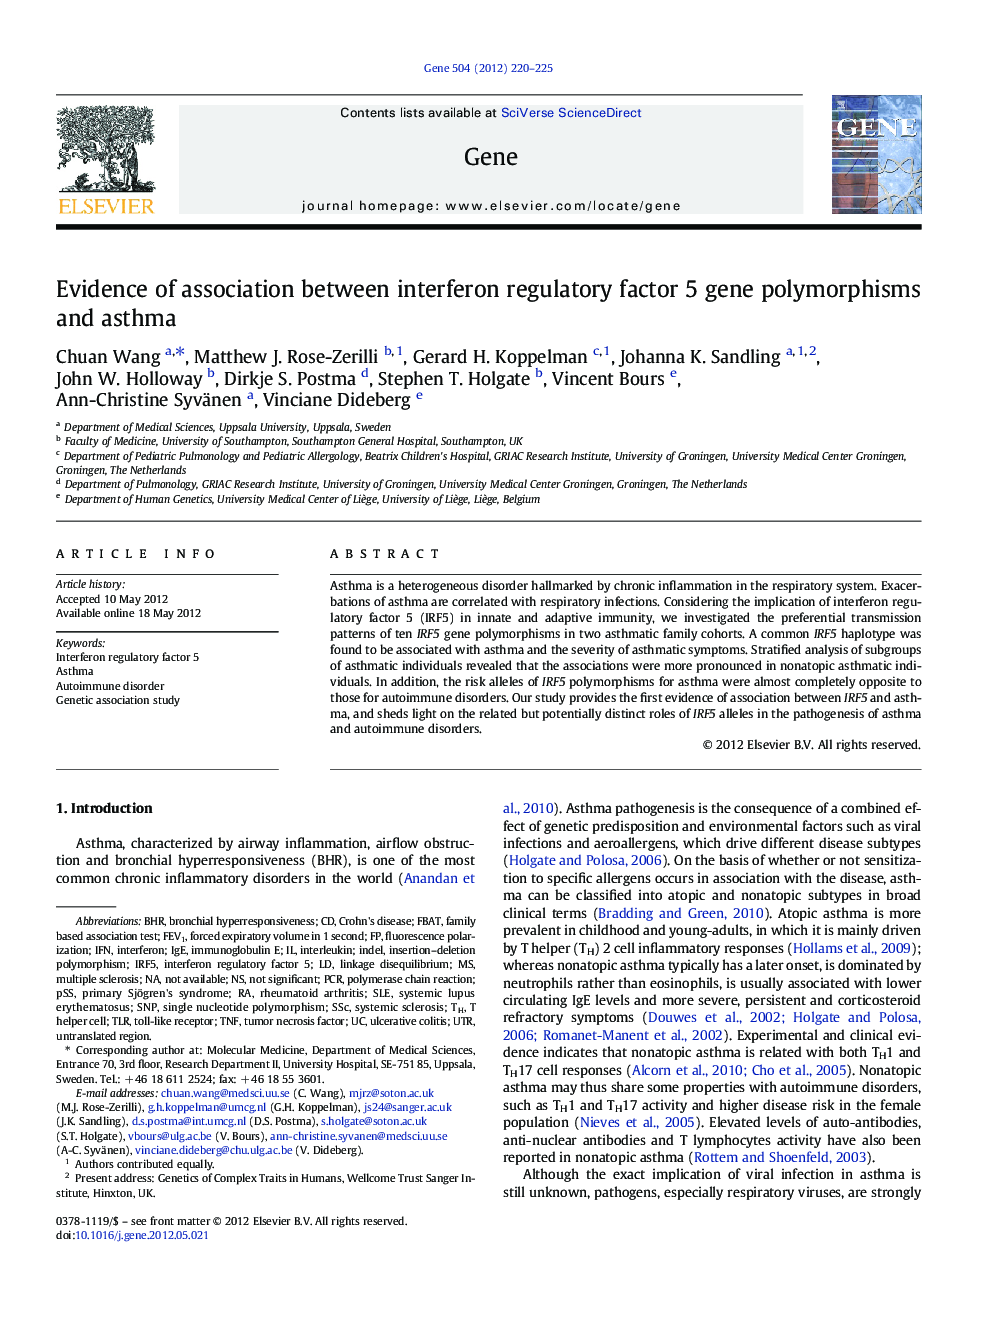 Evidence of association between interferon regulatory factor 5 gene polymorphisms and asthma